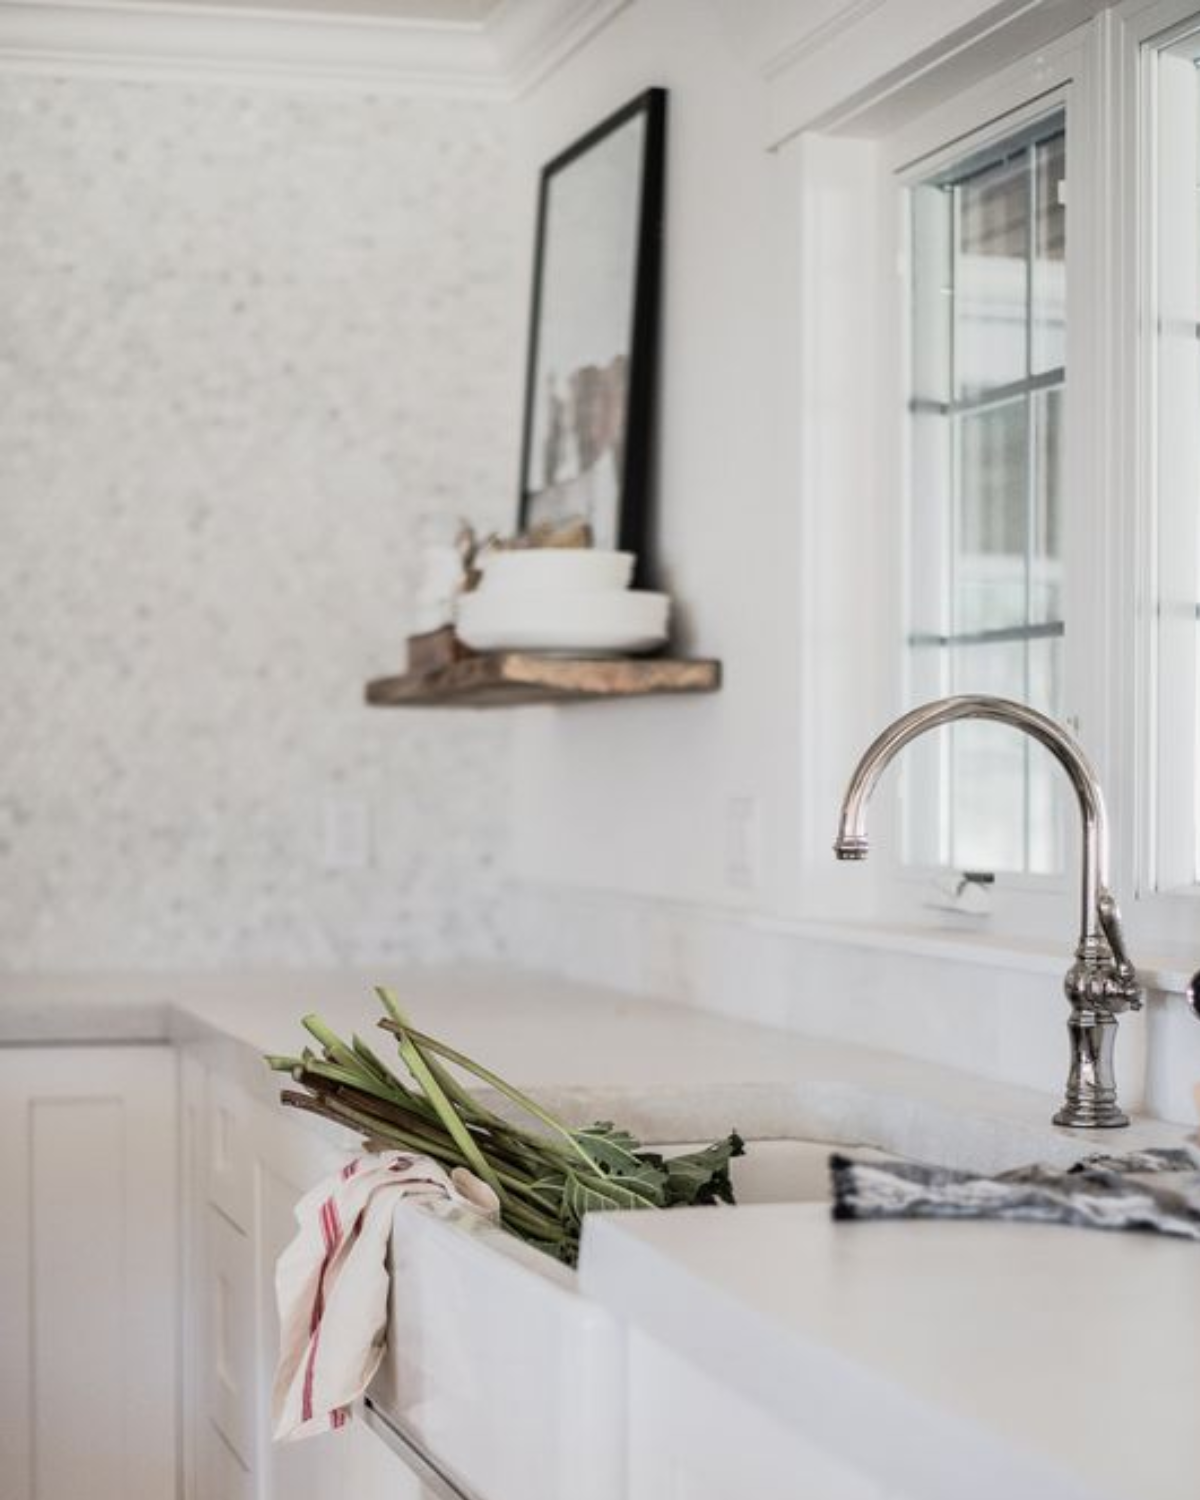 White concrete countertops in a beautiful kitchen setting.